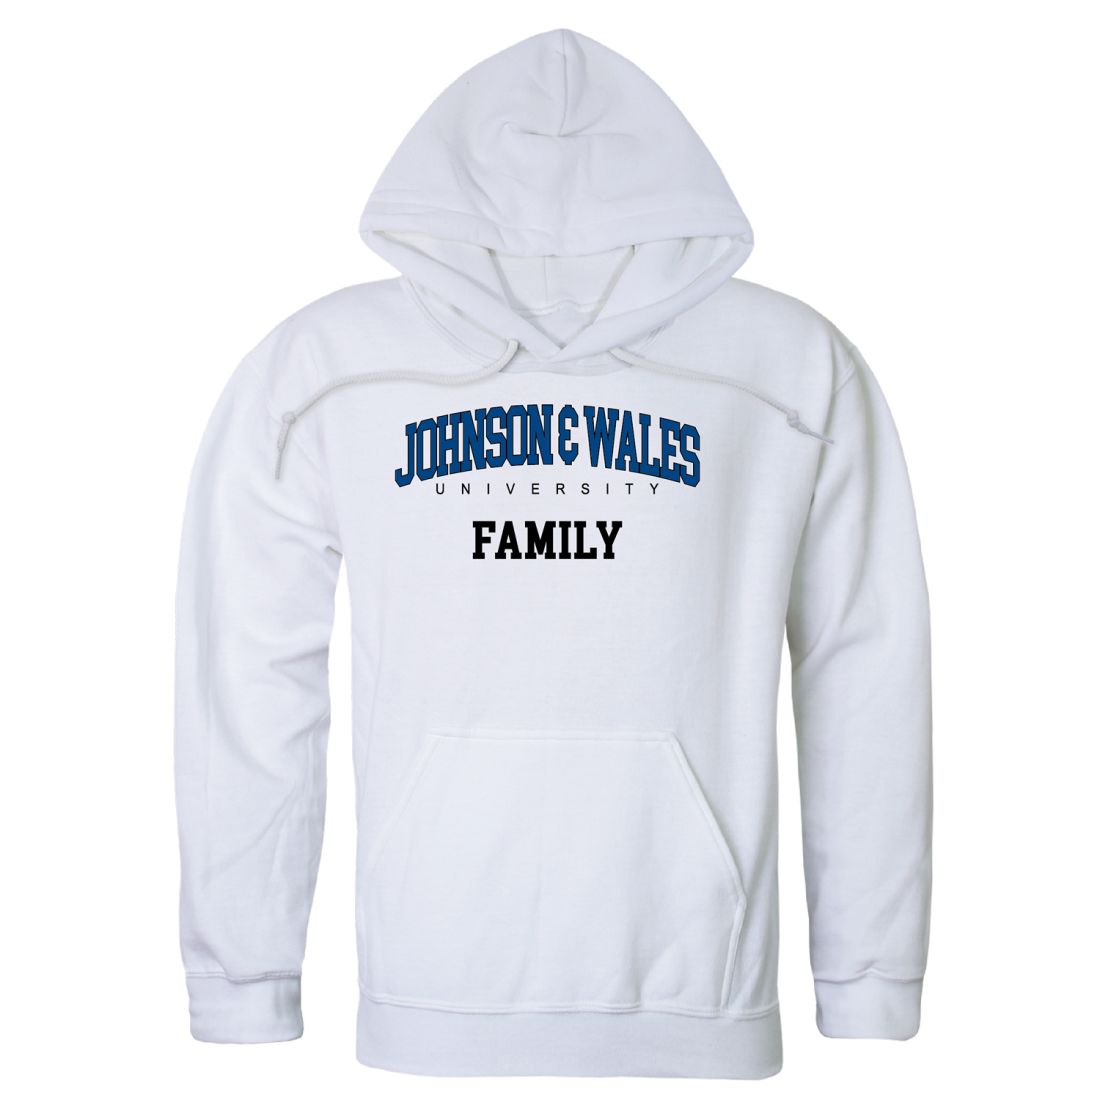 Johnson & Wales University Wildcats Family Hoodie Sweatshirts